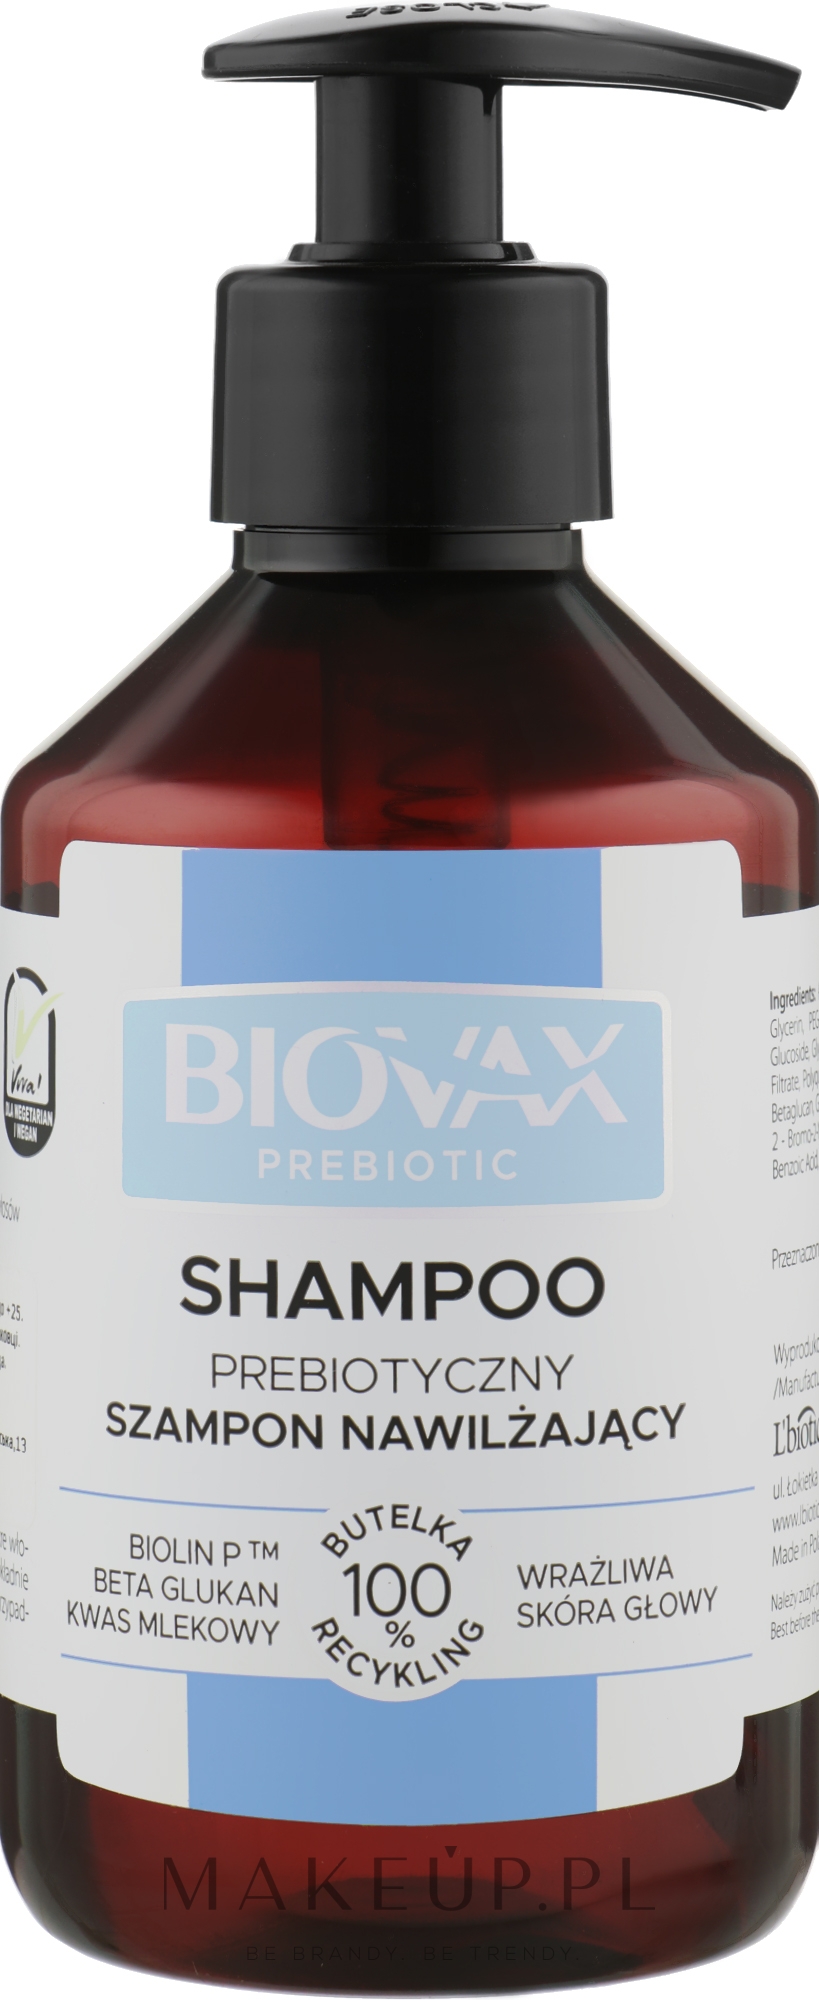 biovax orchid szampon wizaż